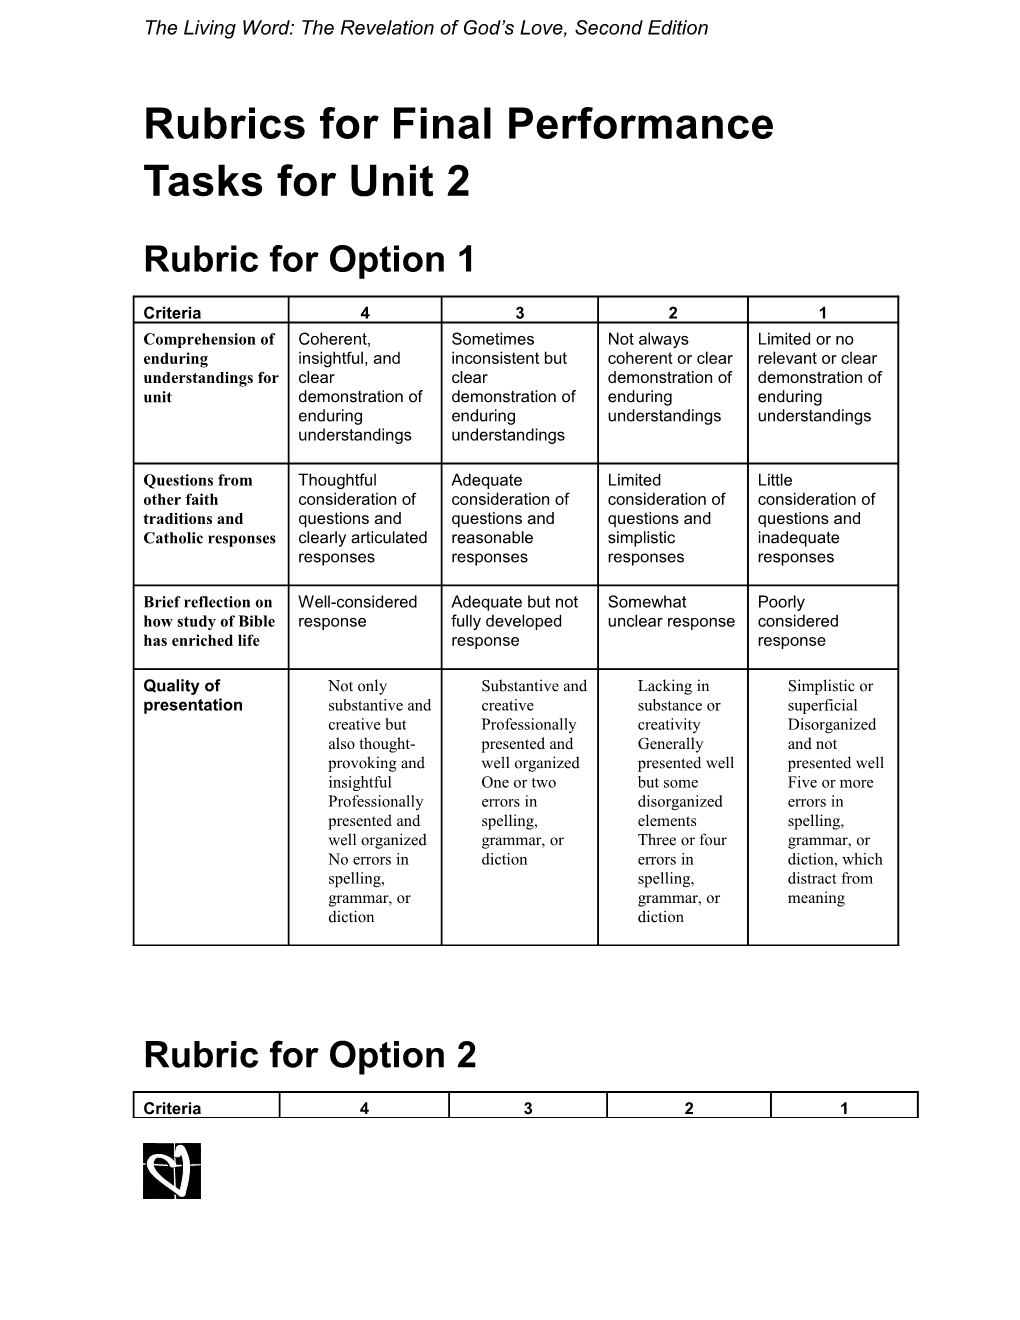 Rubrics for Final Performance Tasks for Unit 2